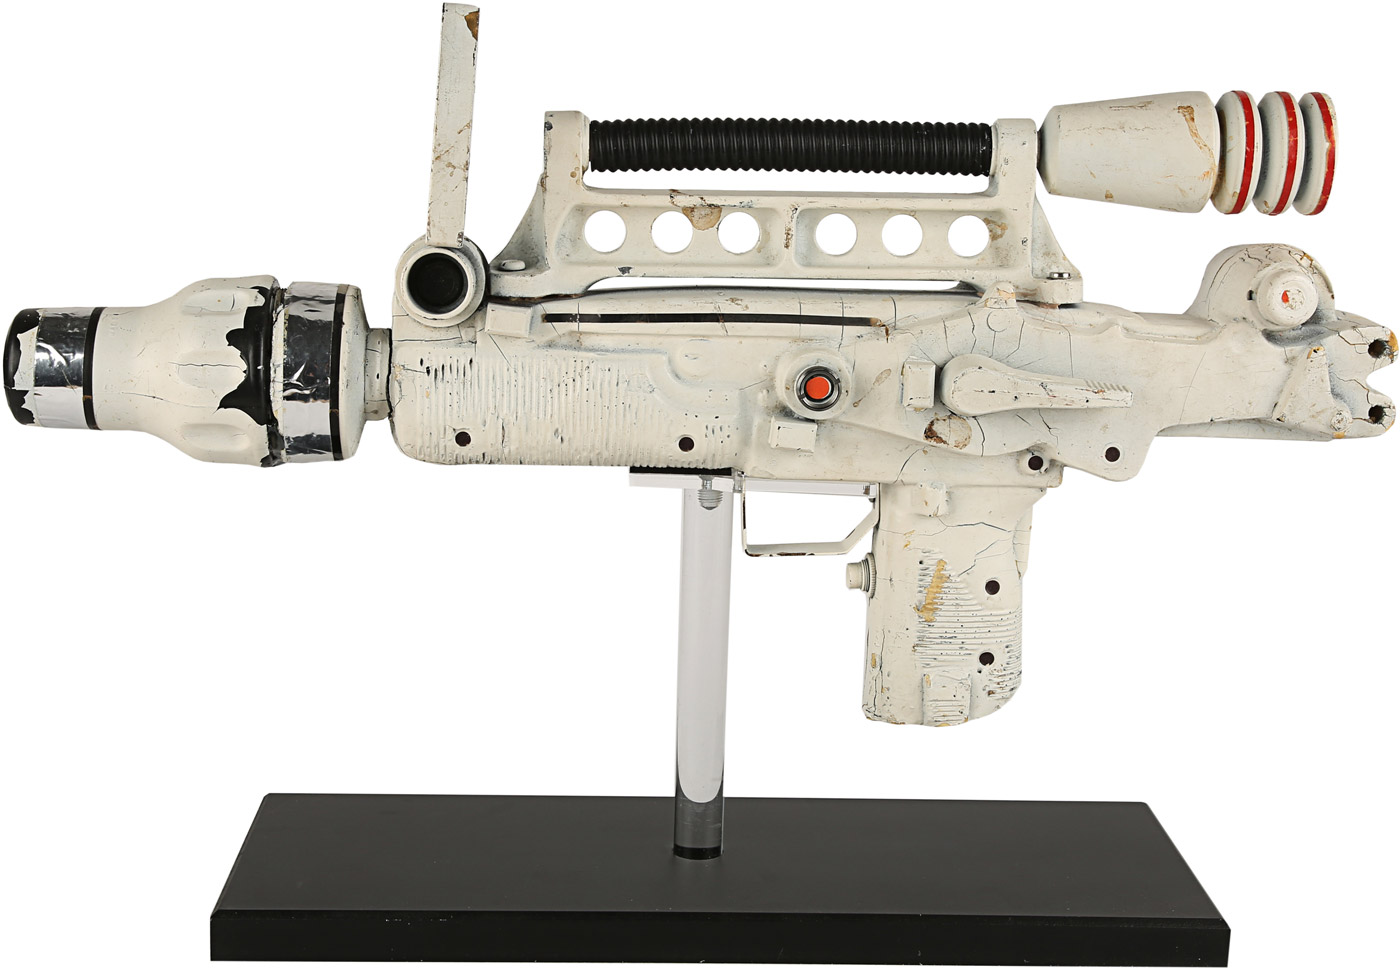 Astronaut Laser Rifle Moonraker (1979)